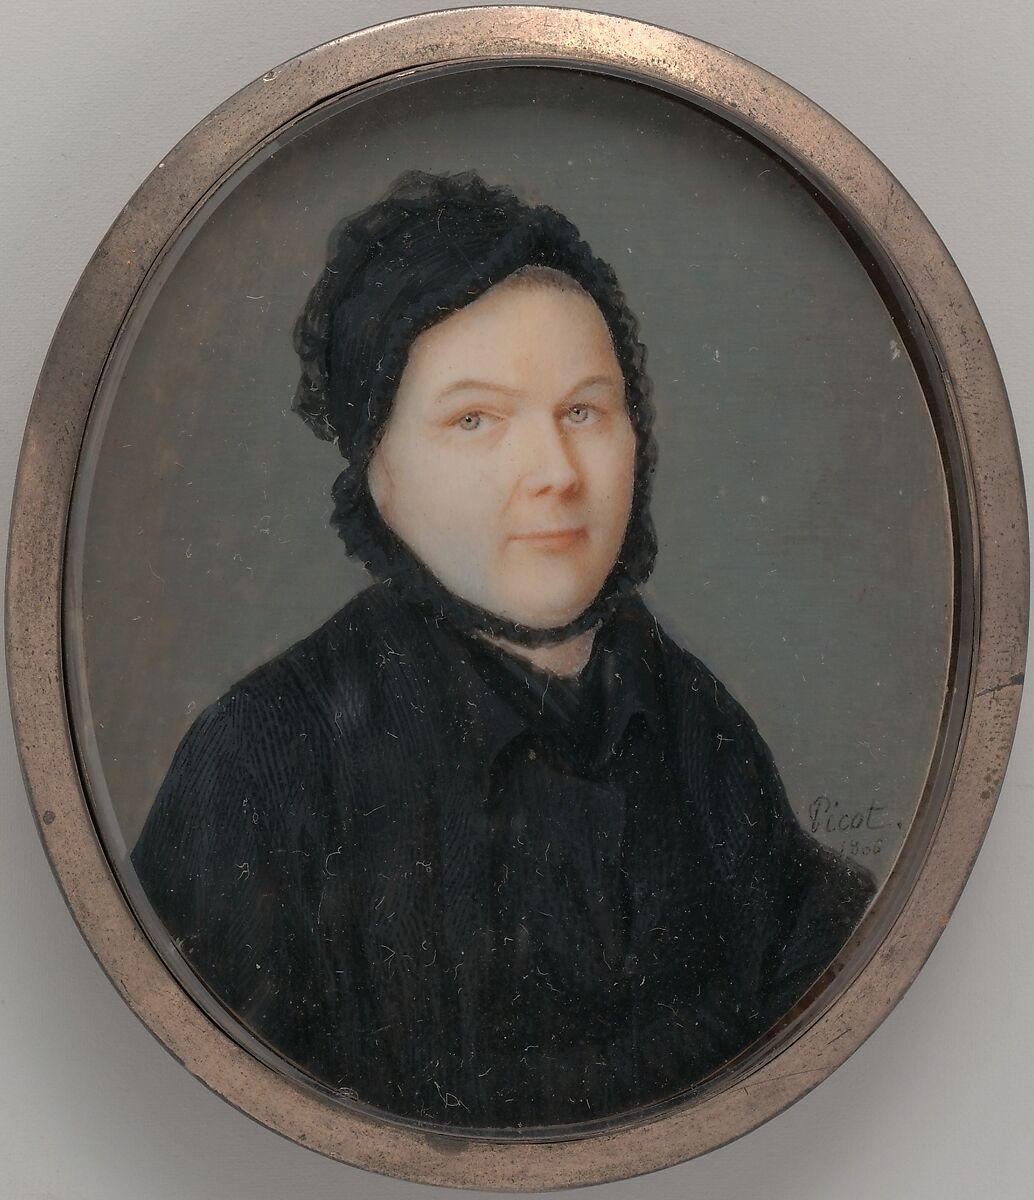 Mrs. Phineas Miller (Catherine Littlefield), Joseph-Pierre Picot de Limoelan de Cloriviere (Broons, France 1768–1826 Washington, D.C.), Watercolor on ivory, American 